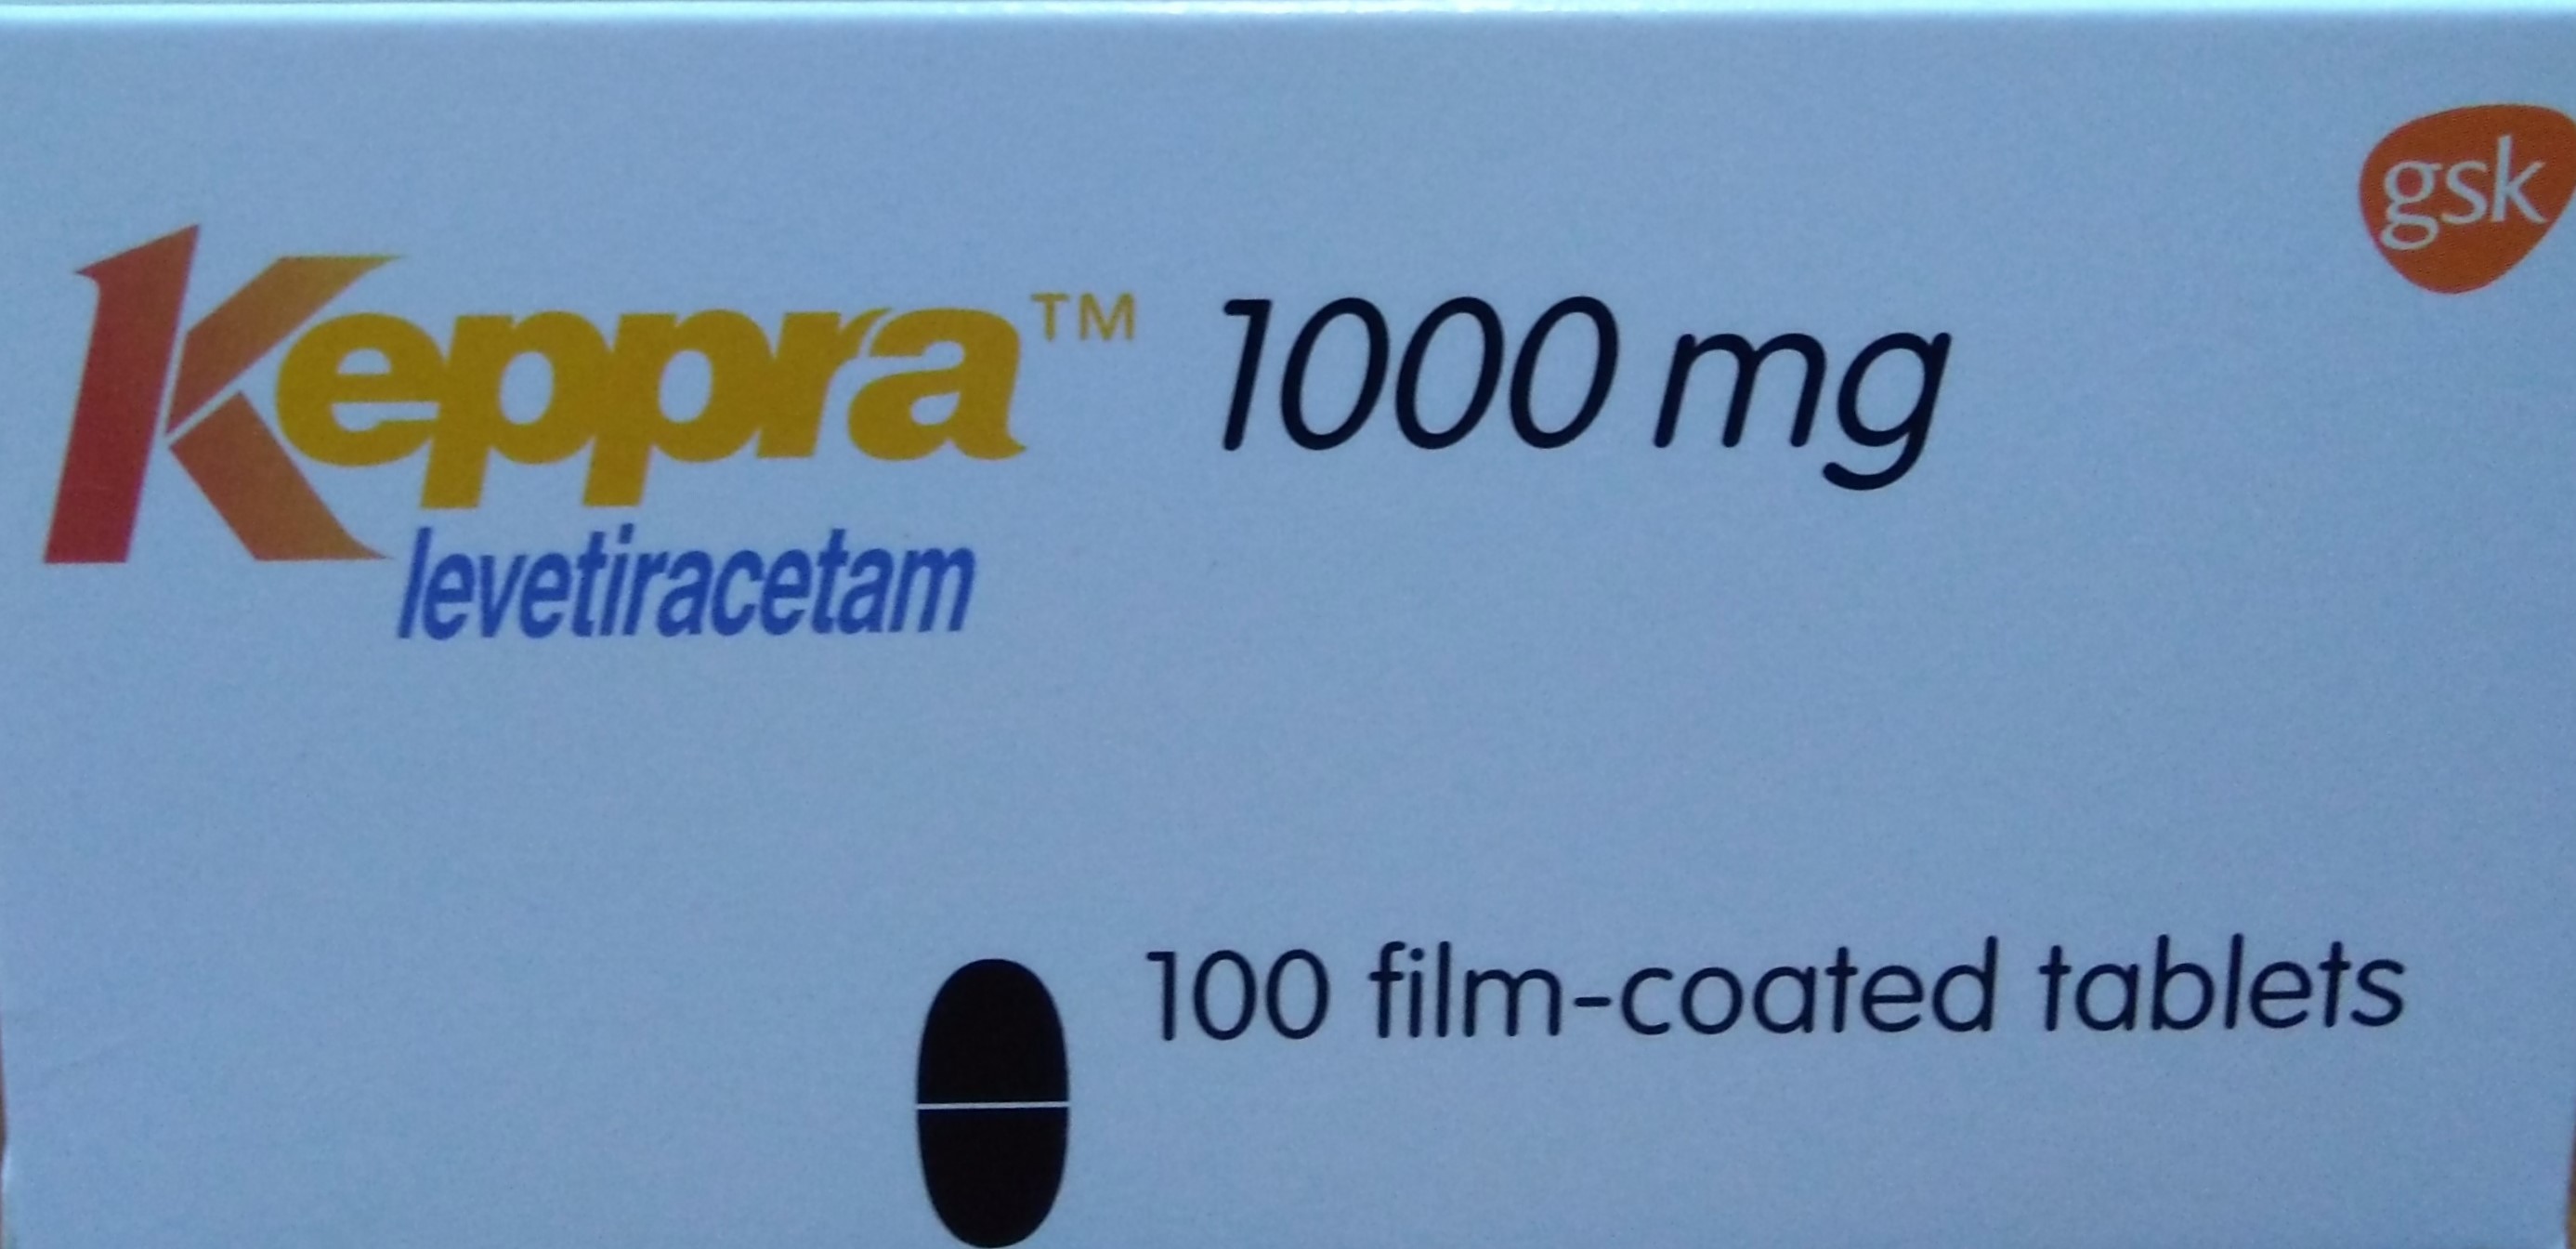 Keppra Tablets 1g